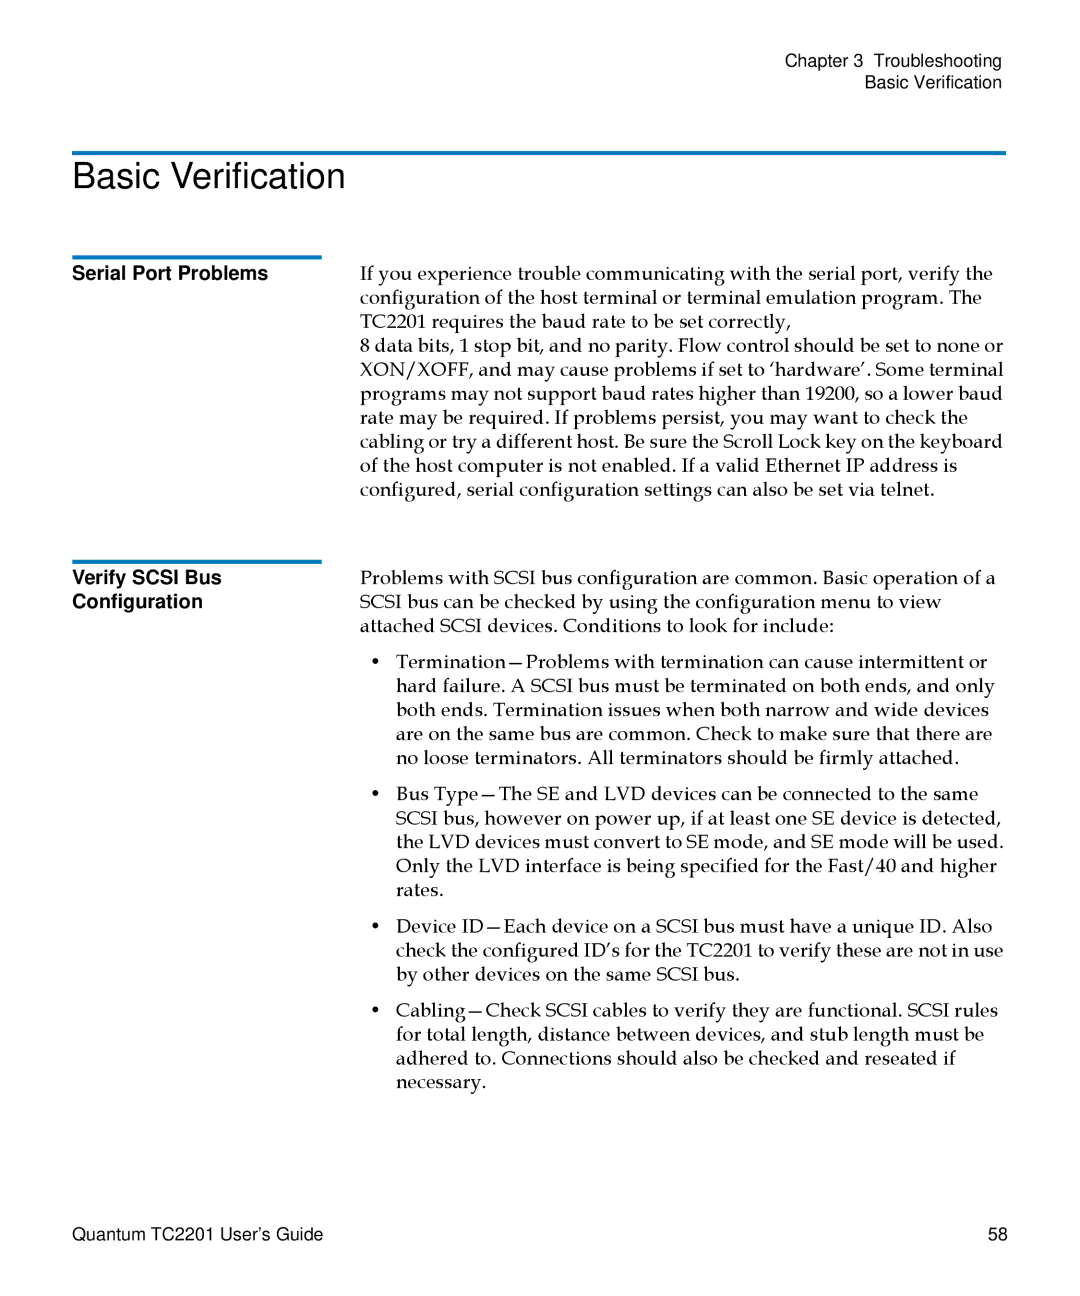 Quantum TC2201 manual Basic Verification, Serial Port Problems, Verify Scsi Bus 